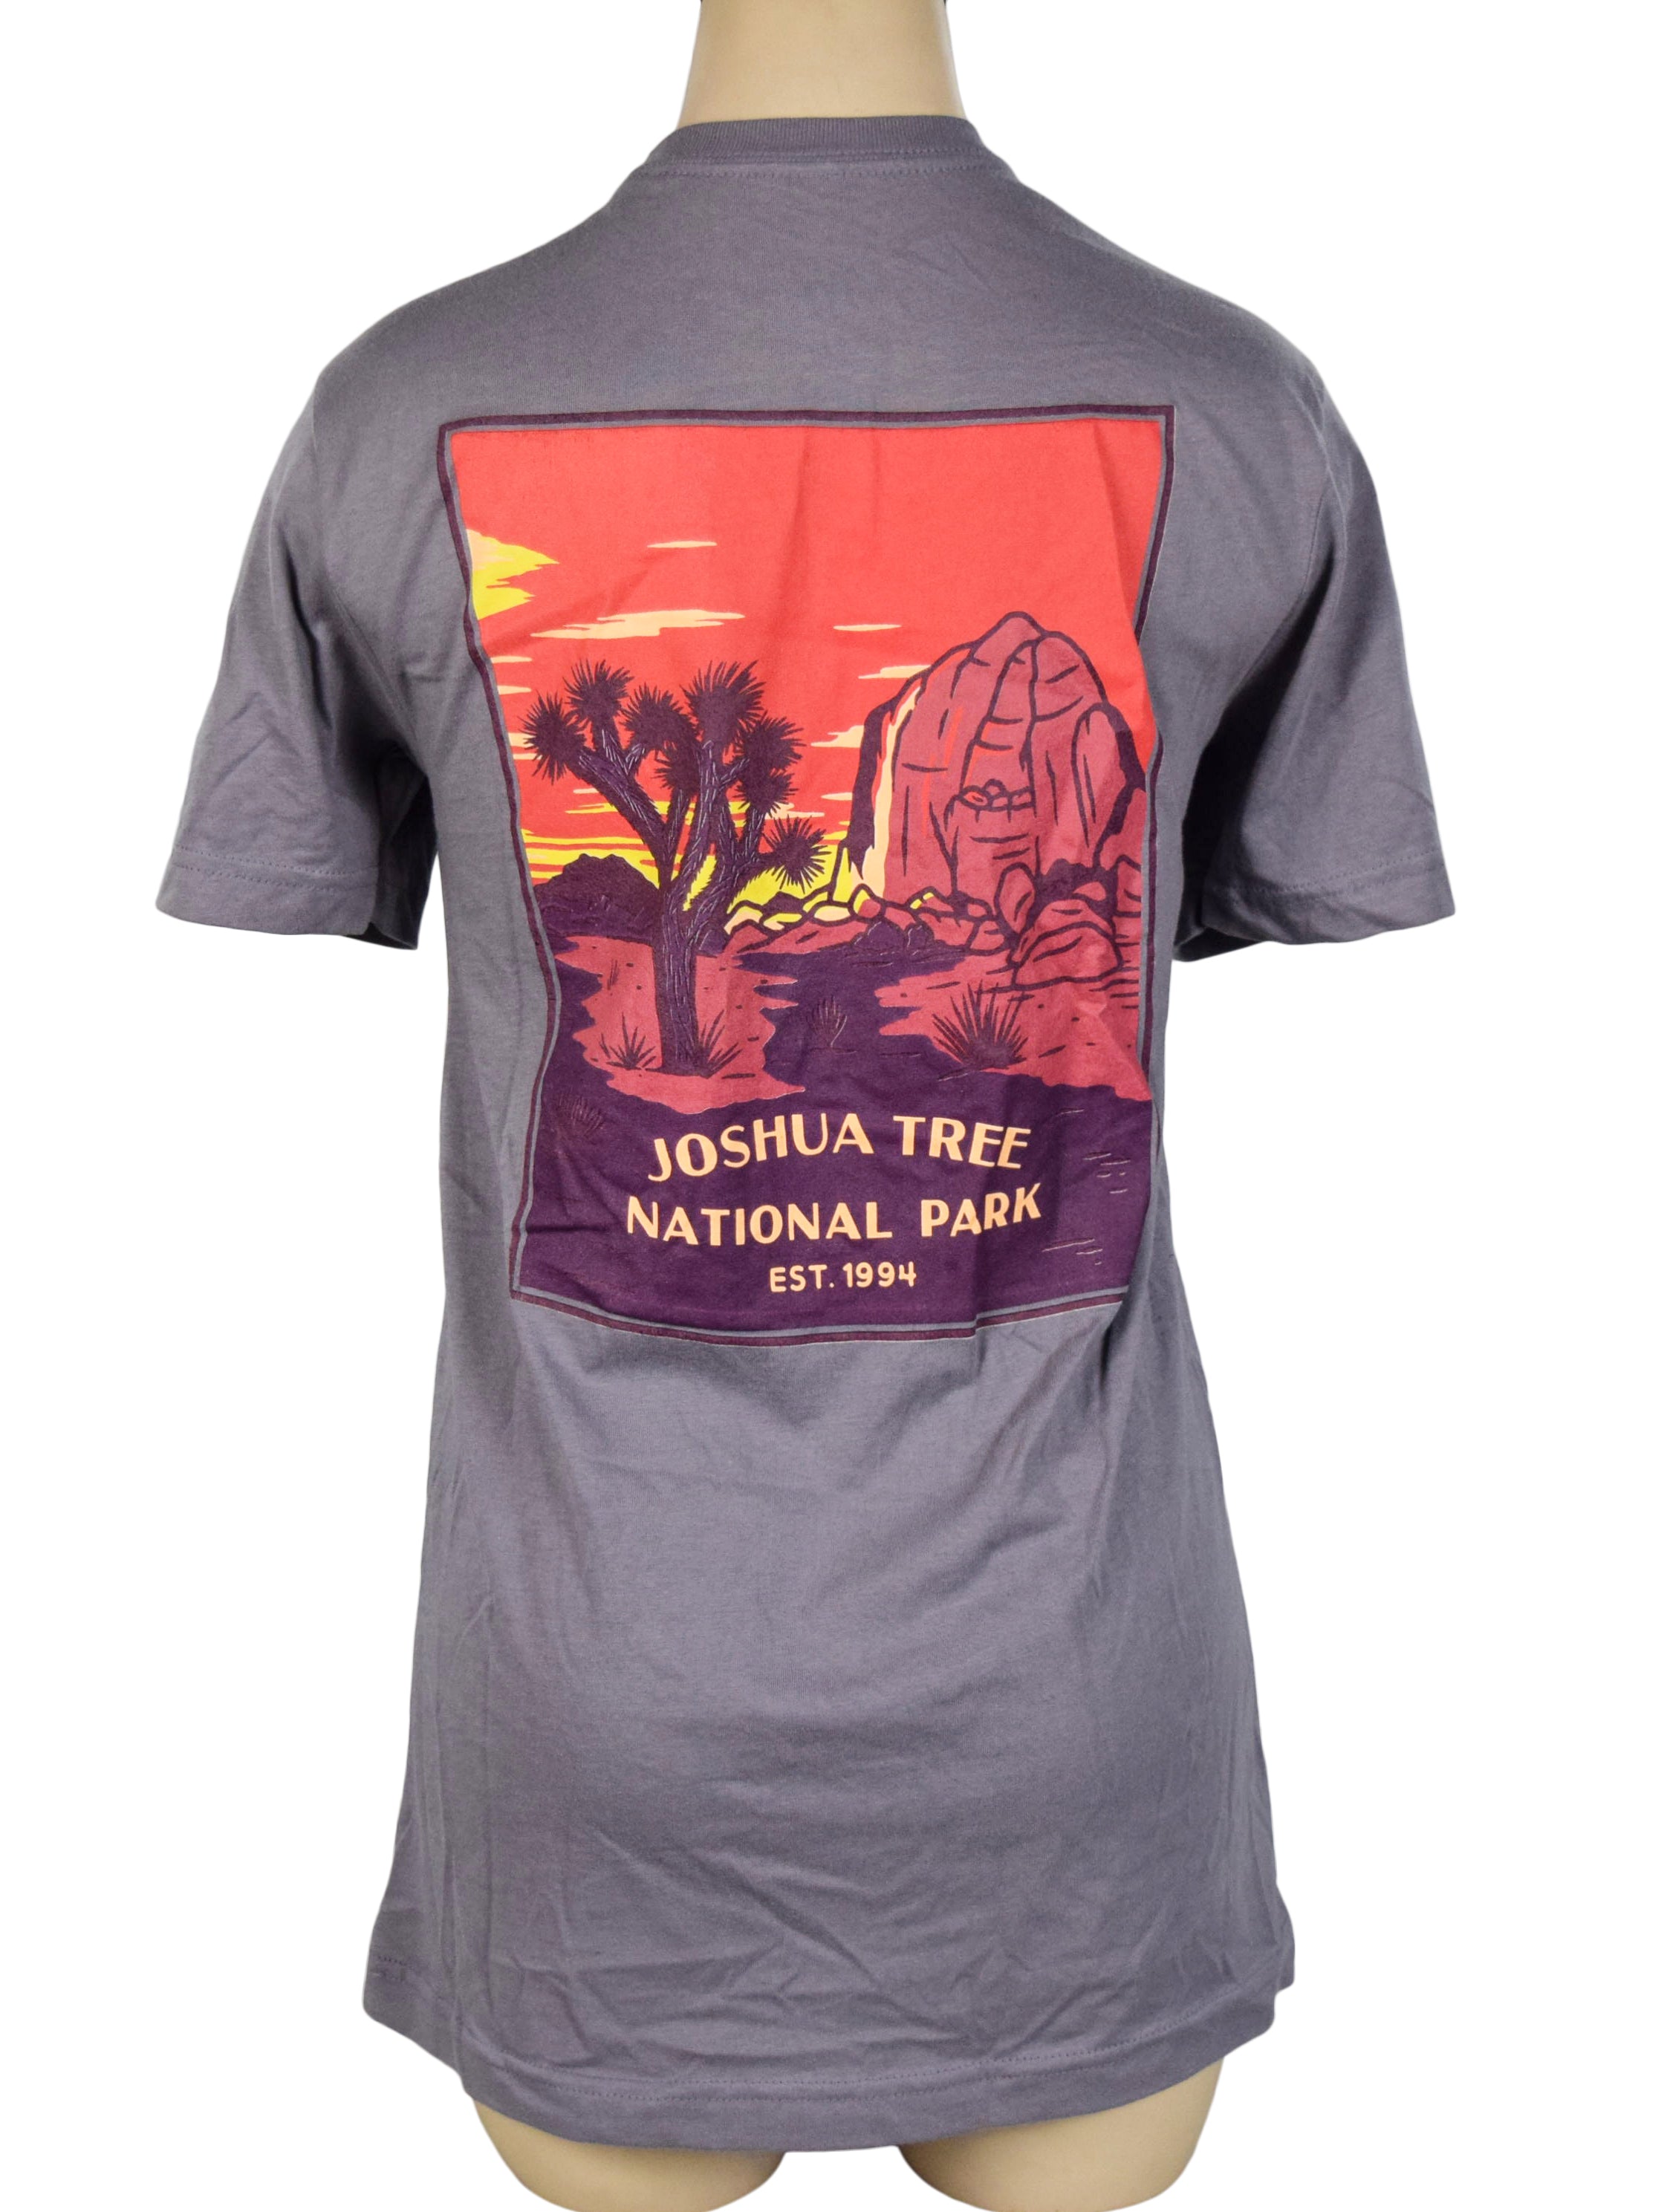 Sendero Provisions Co. Joshua Tree National Park "Storm" T-Shirt (M)